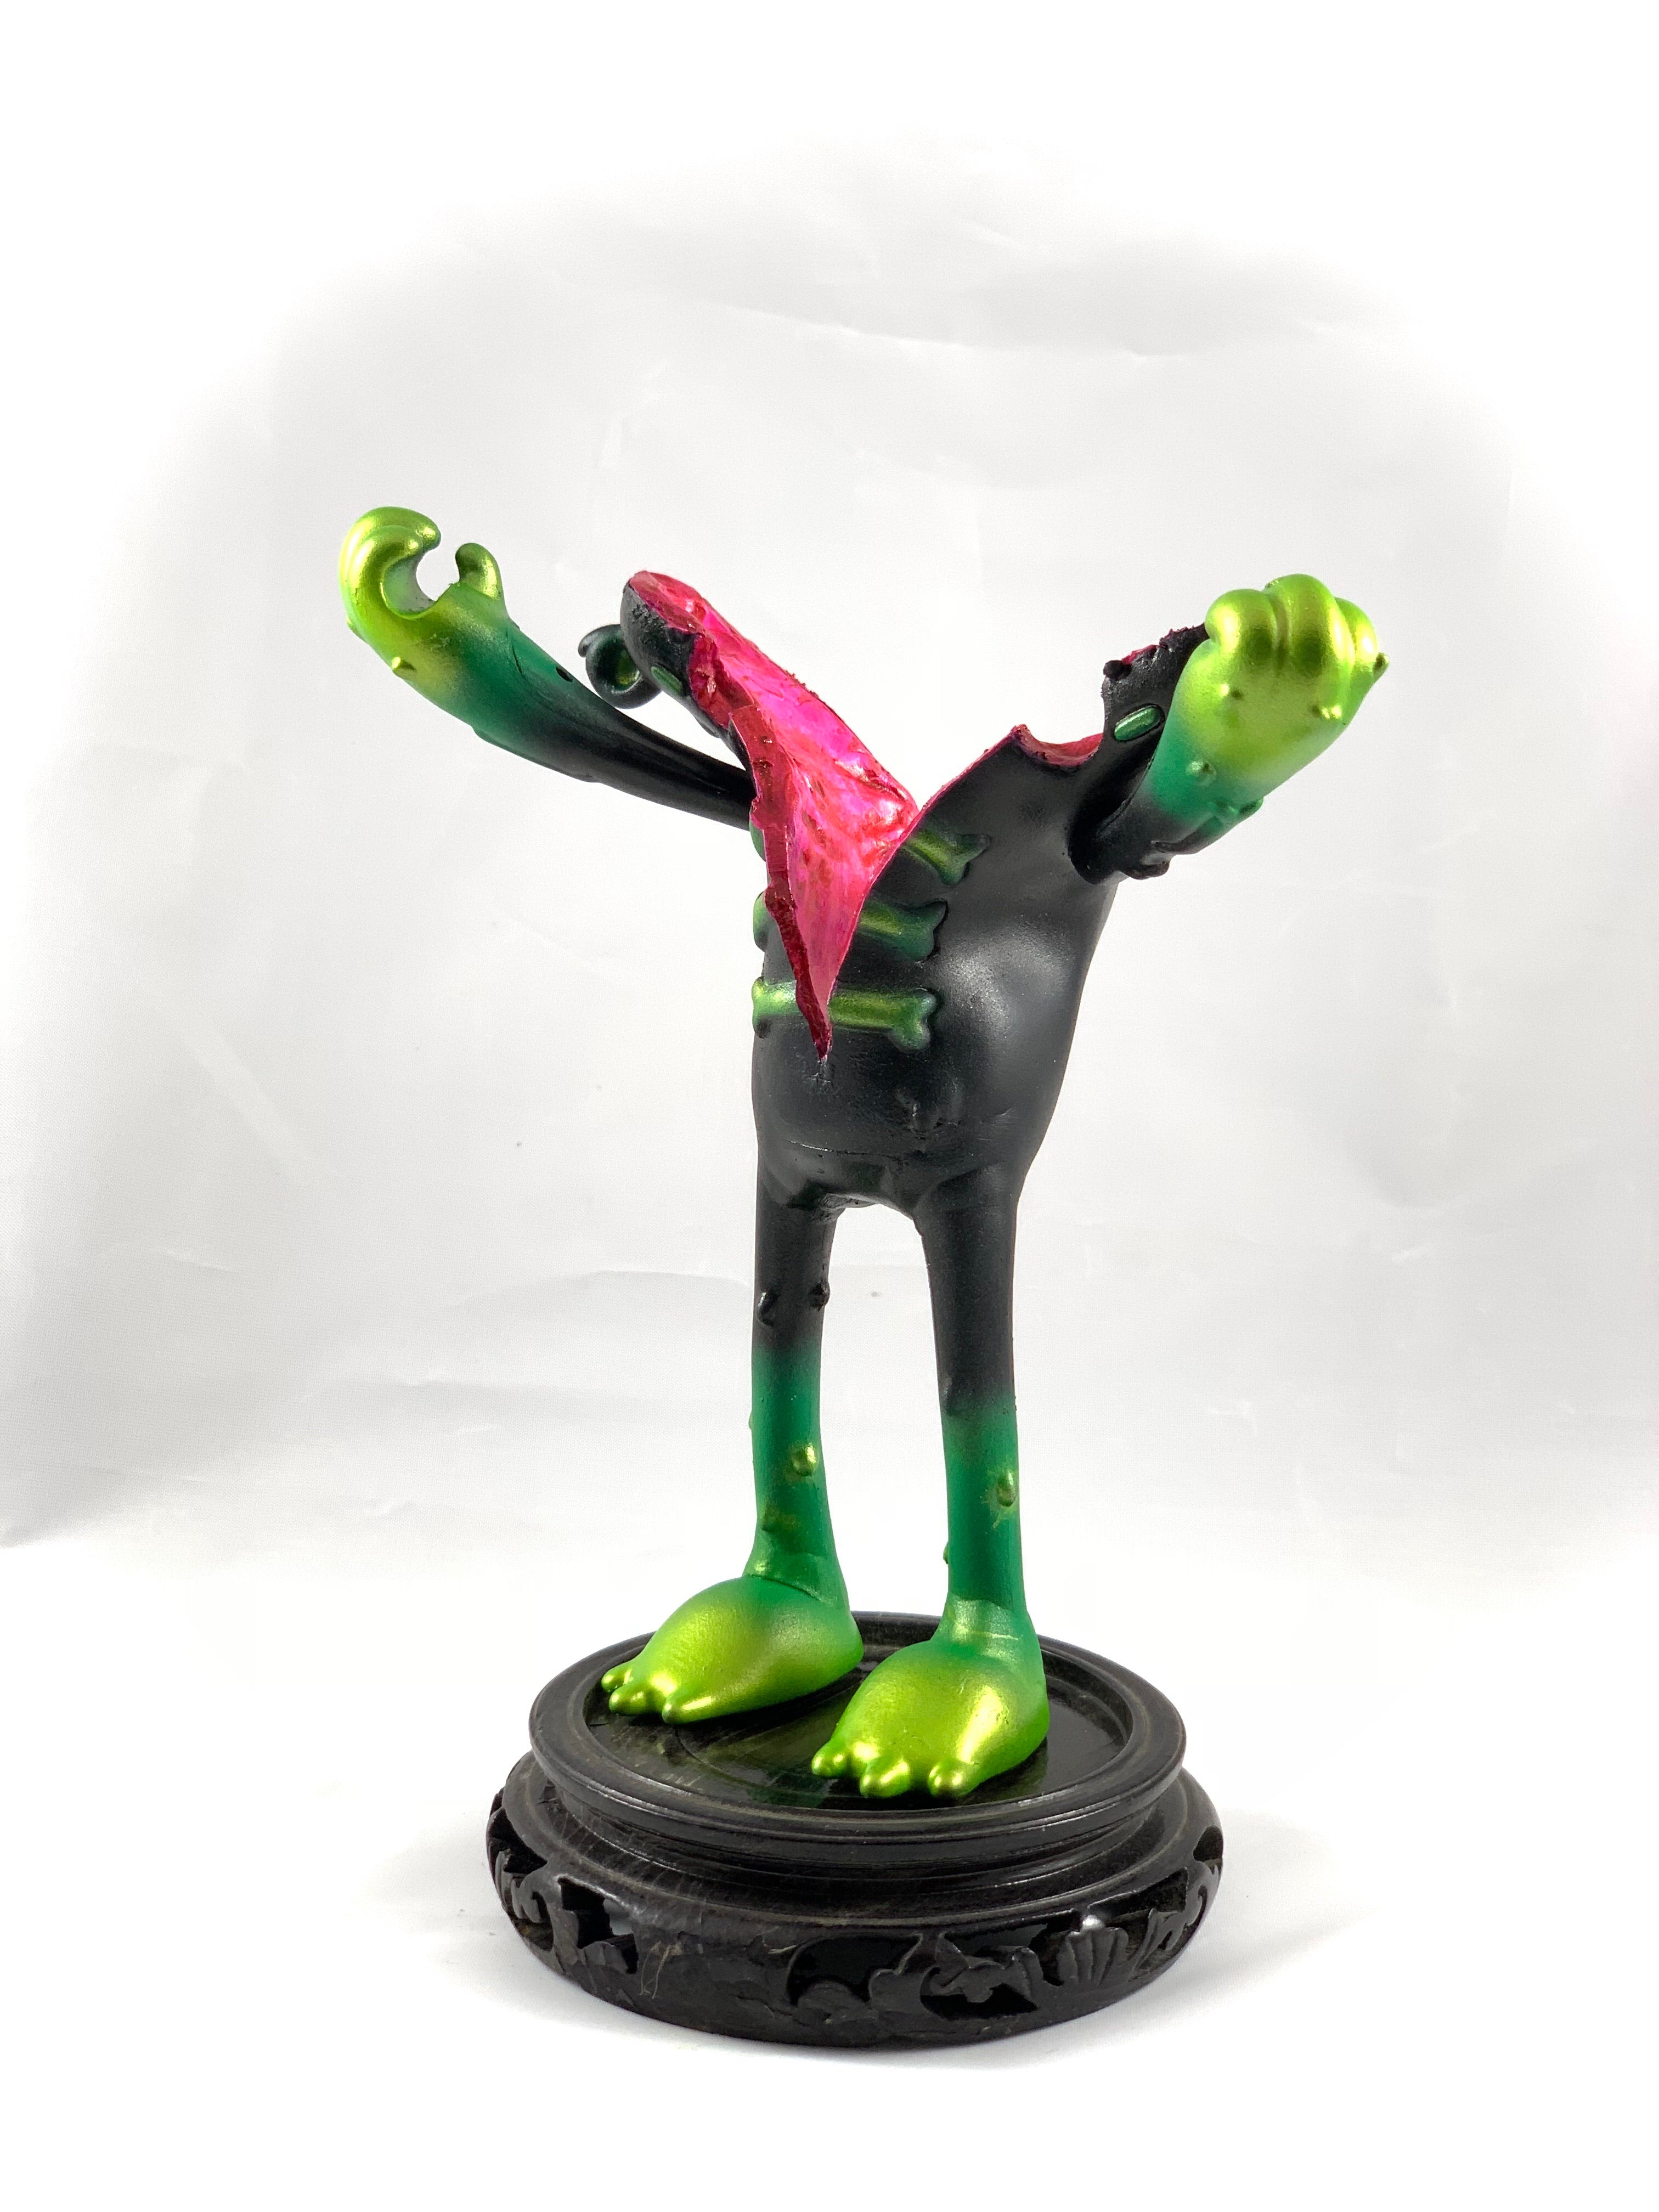 Toxic Misfit - RedGuardian Art & Toys